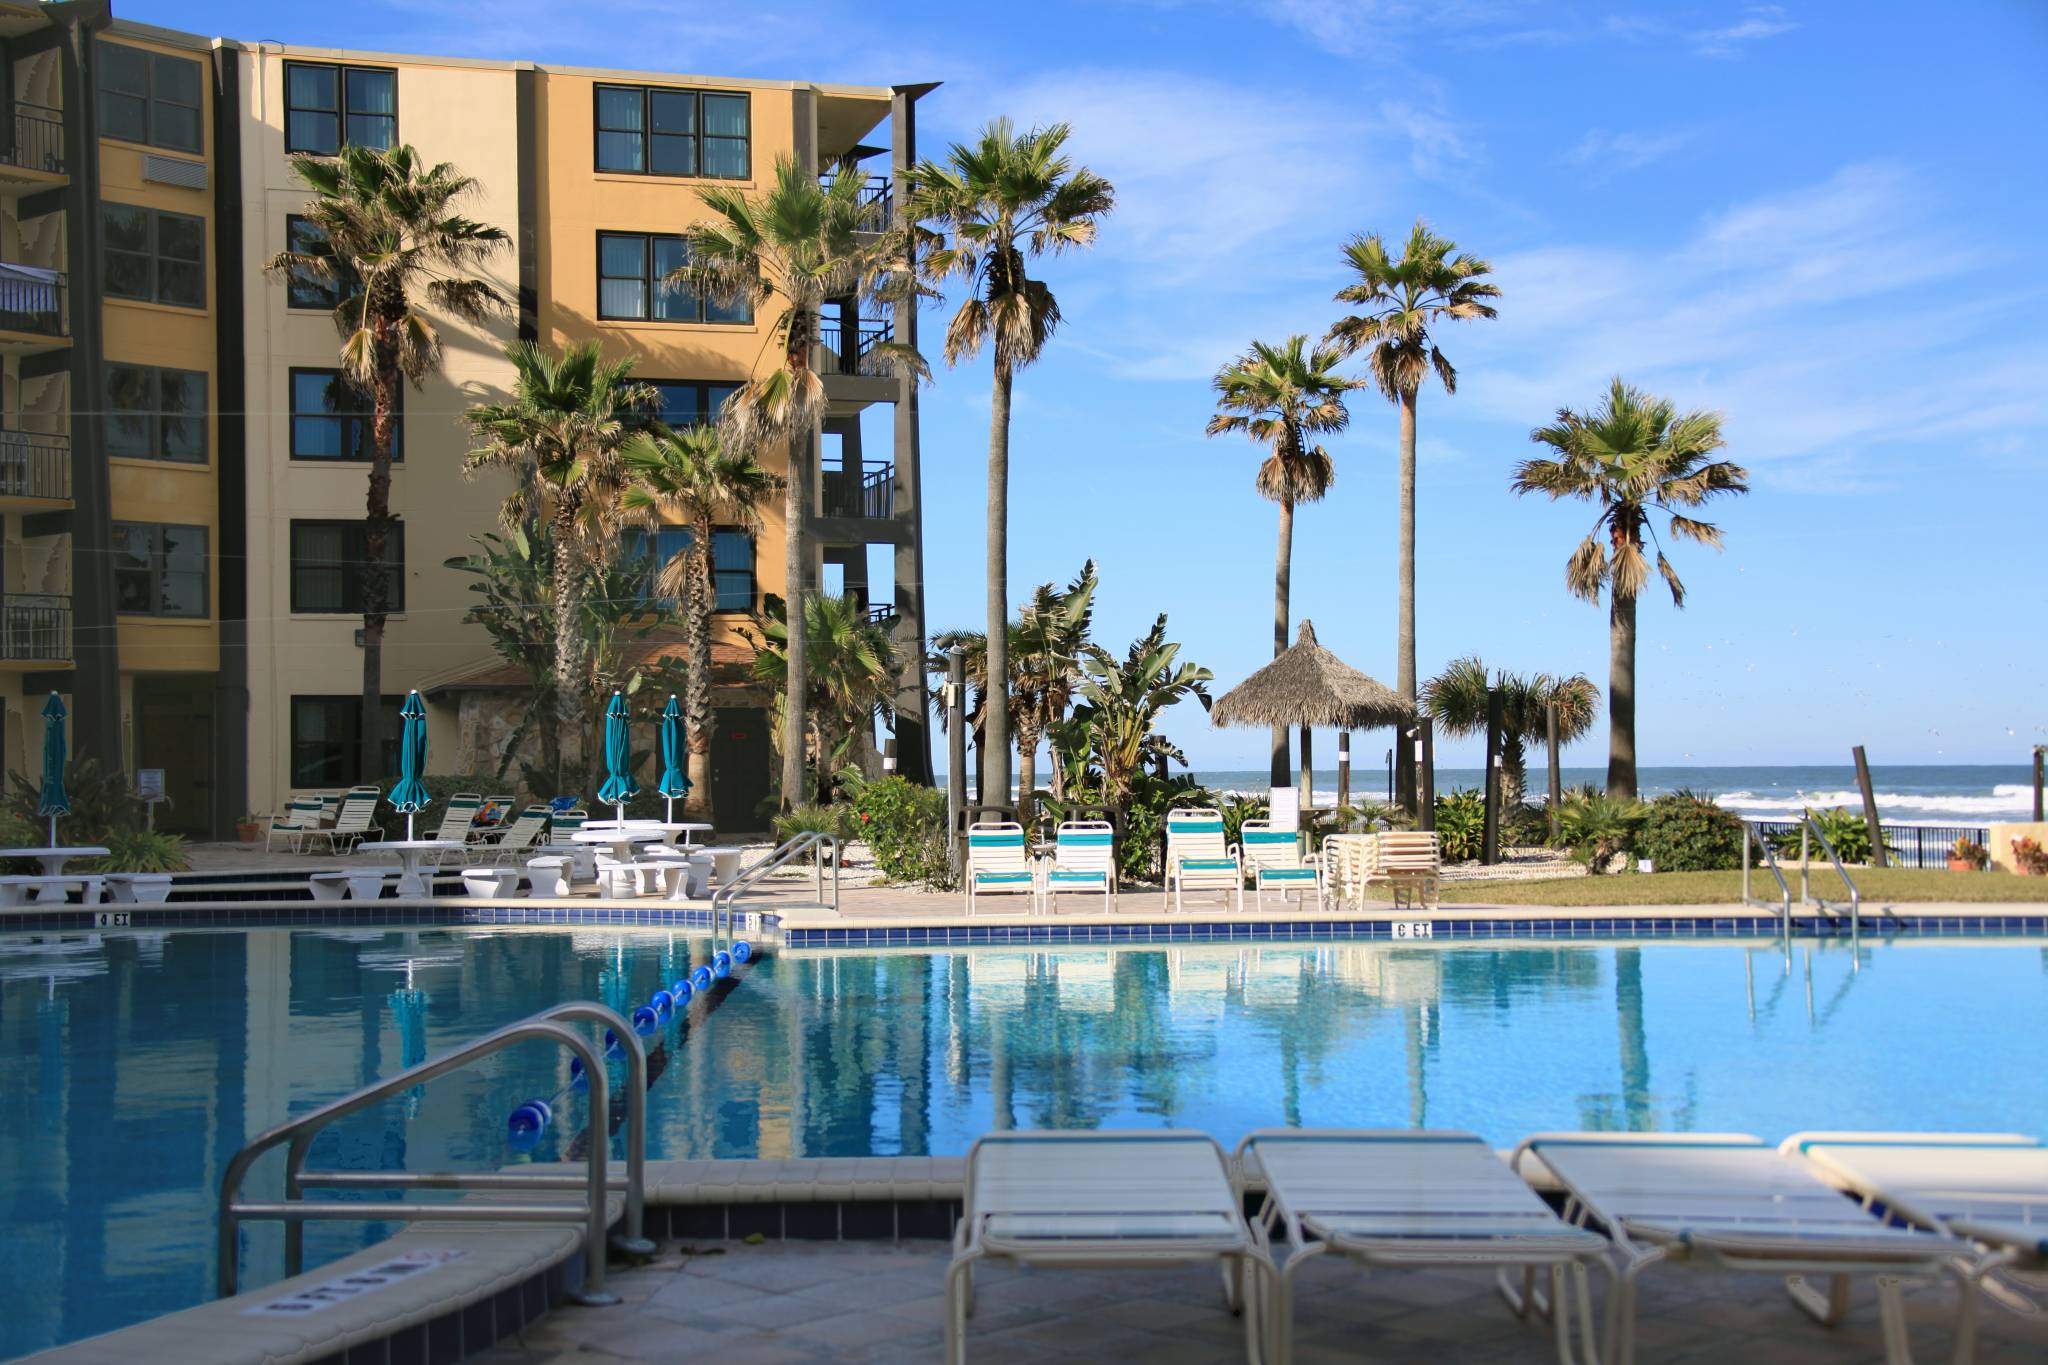 Hawaiian Inn Beach Resort in Daytona Beach Shores Daytona Condos